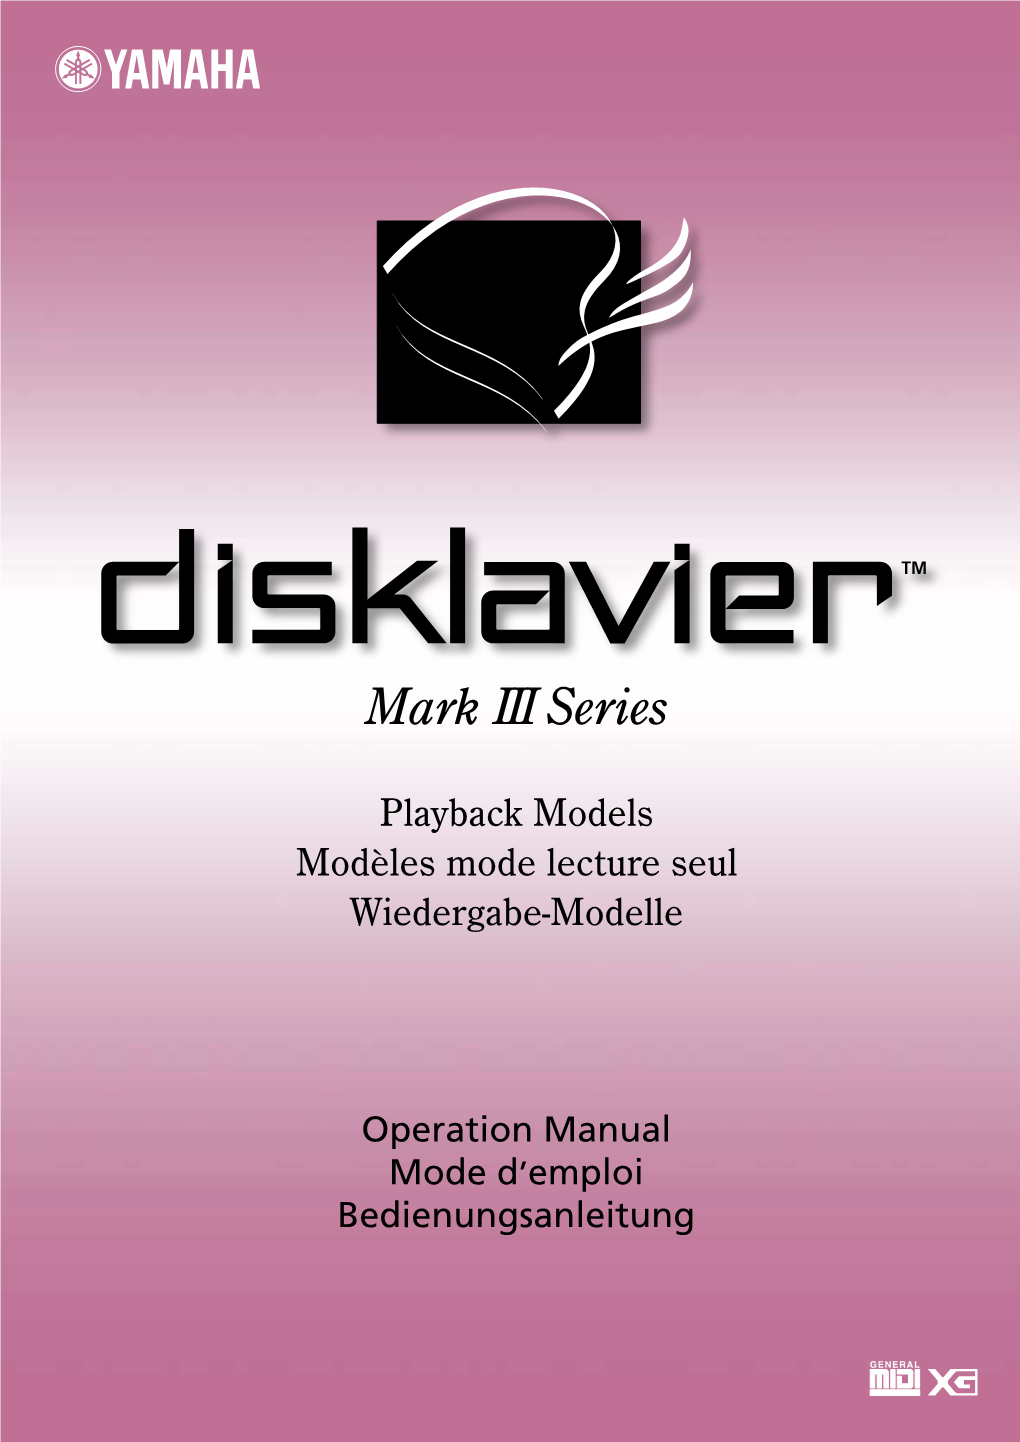 Disklavier Manual.Pdf